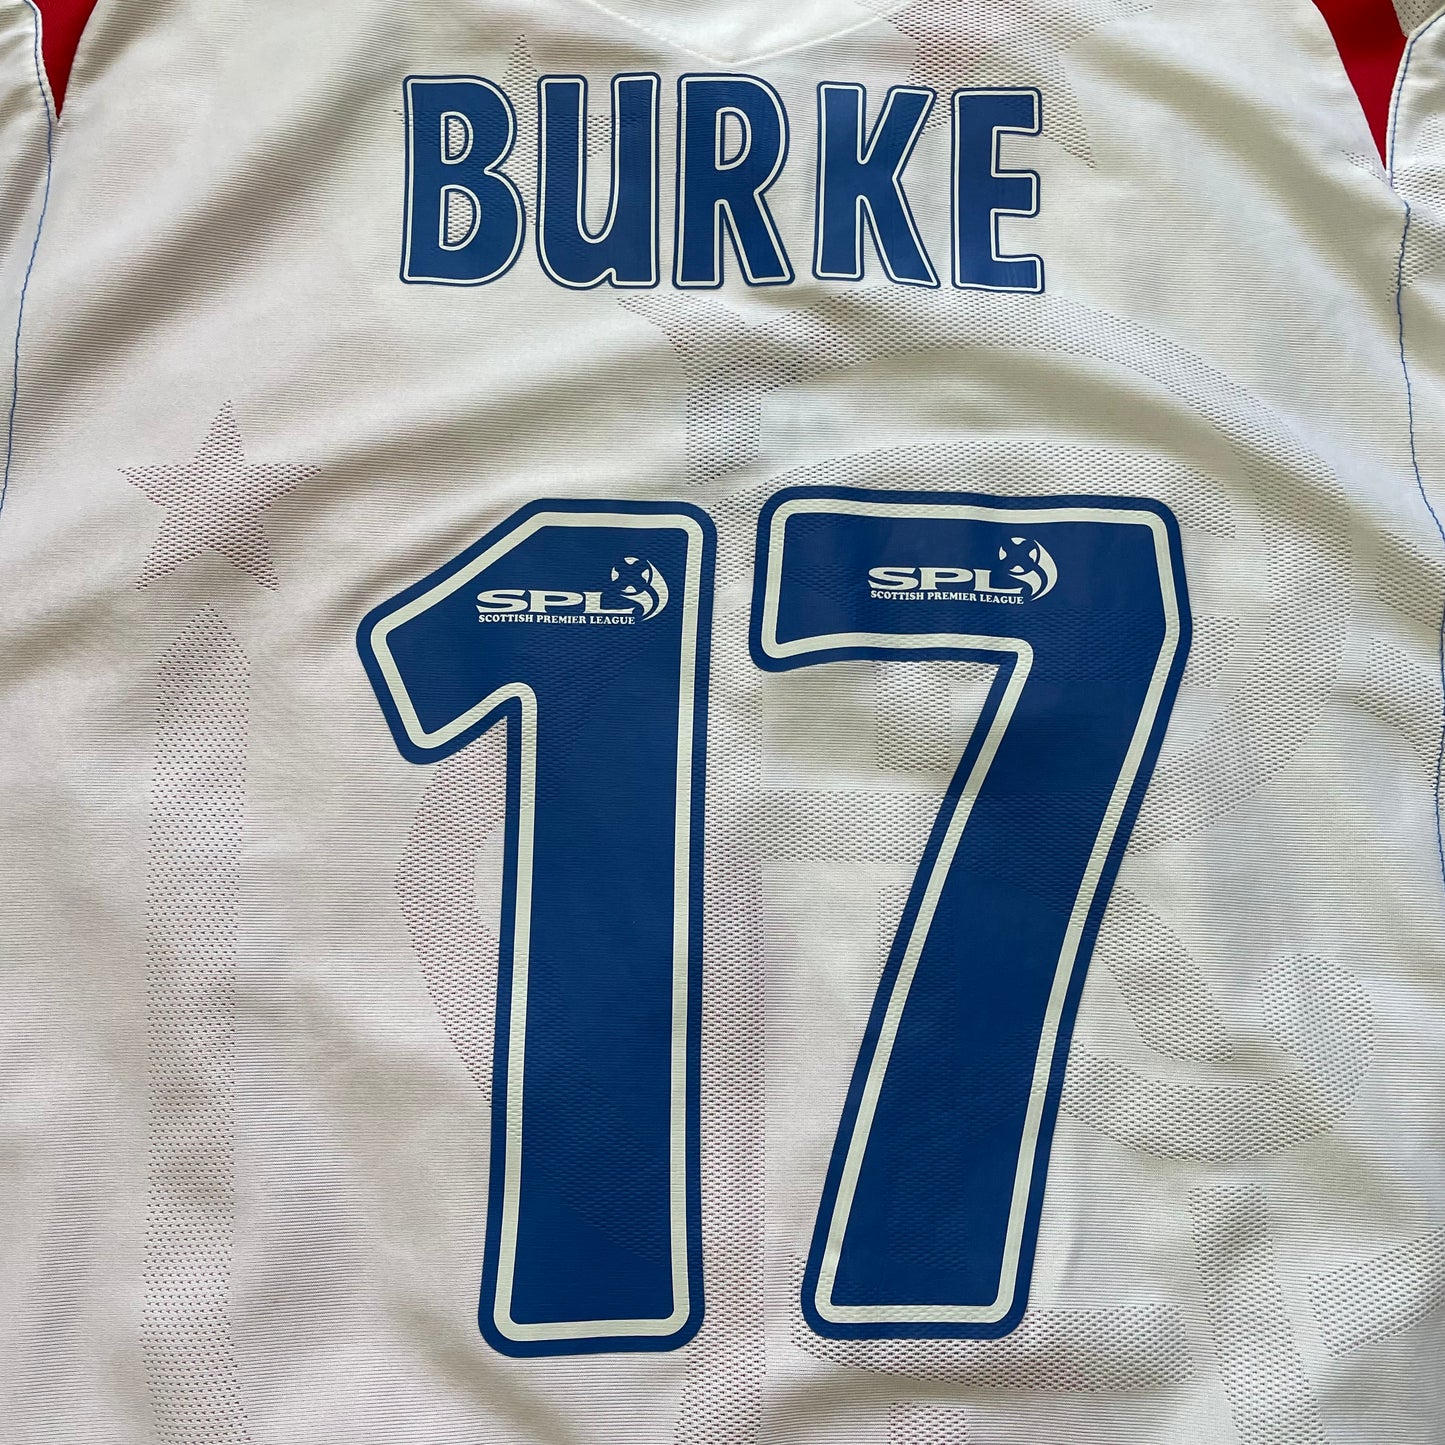 2006-2007 Rangers away shirt #17 Burke (L)